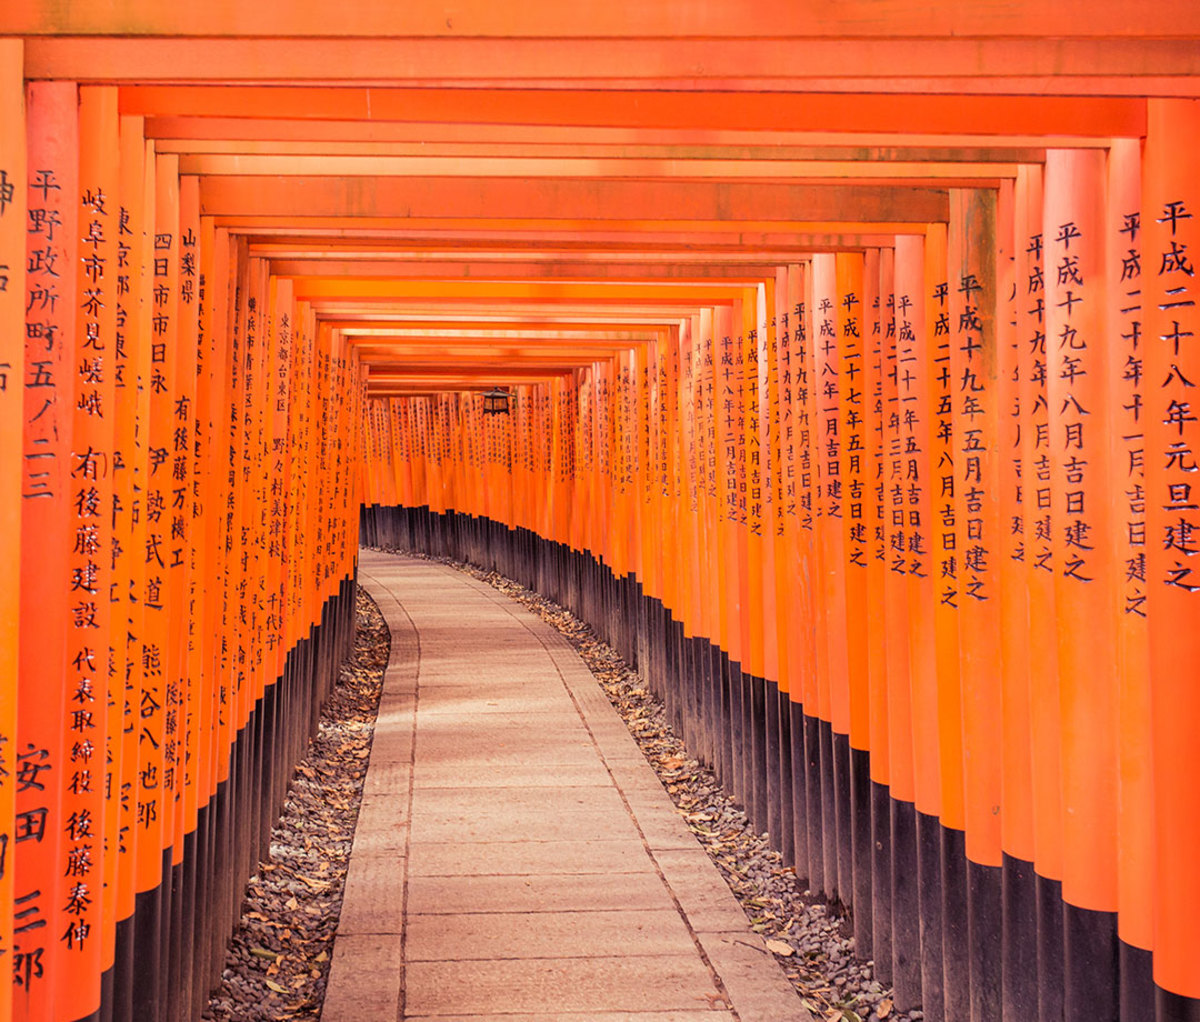 Footpath Amidst Orange Torii Gates With Chinese Script